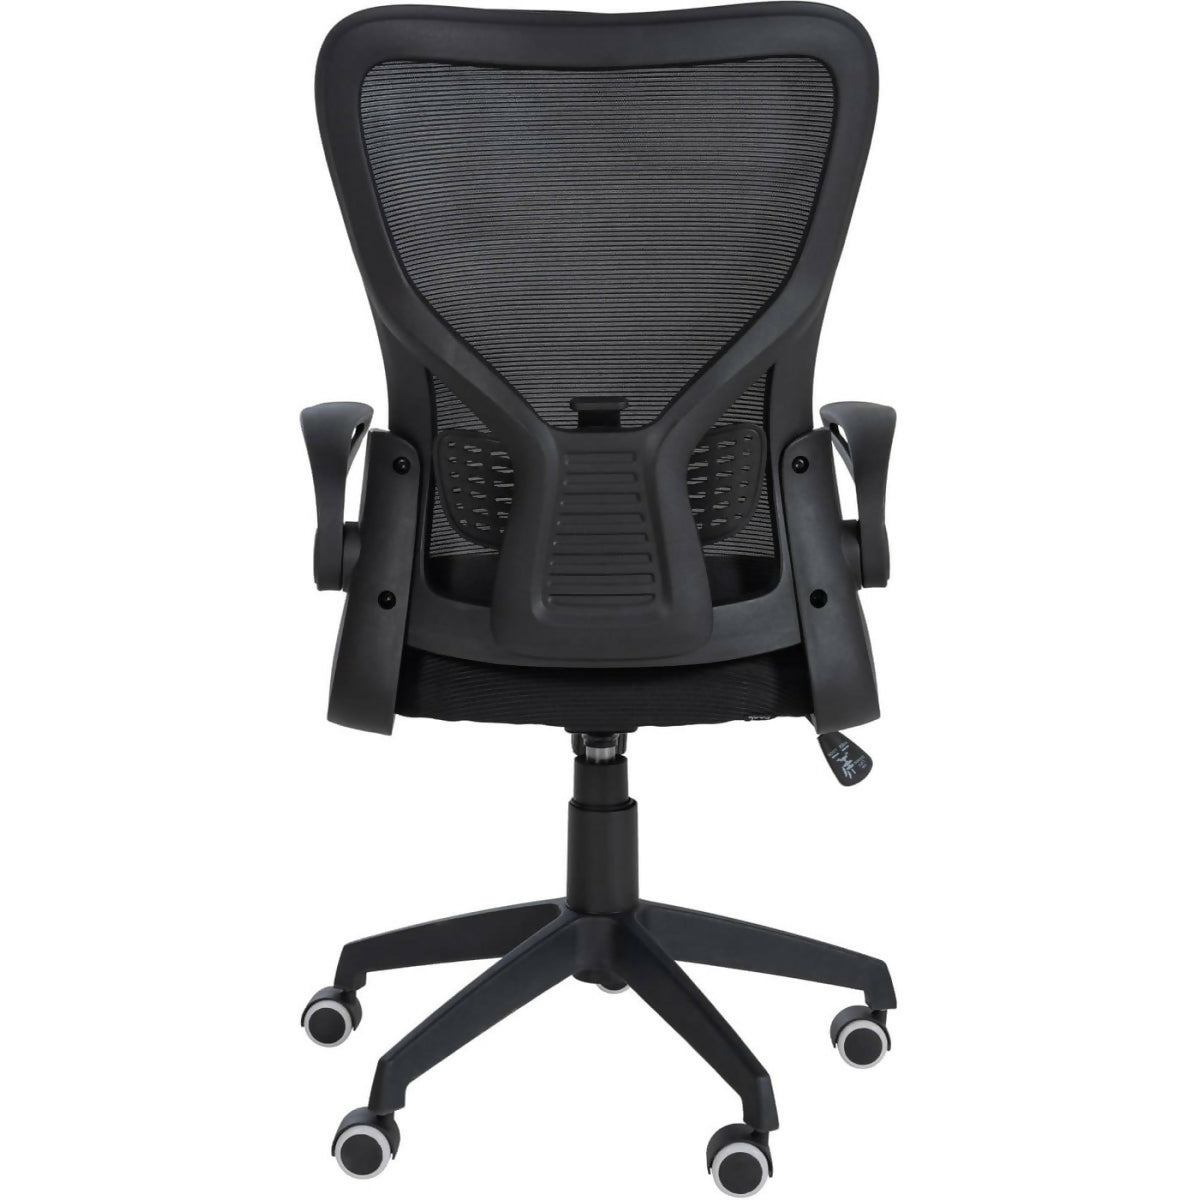 Hudson office chair - Black fabric